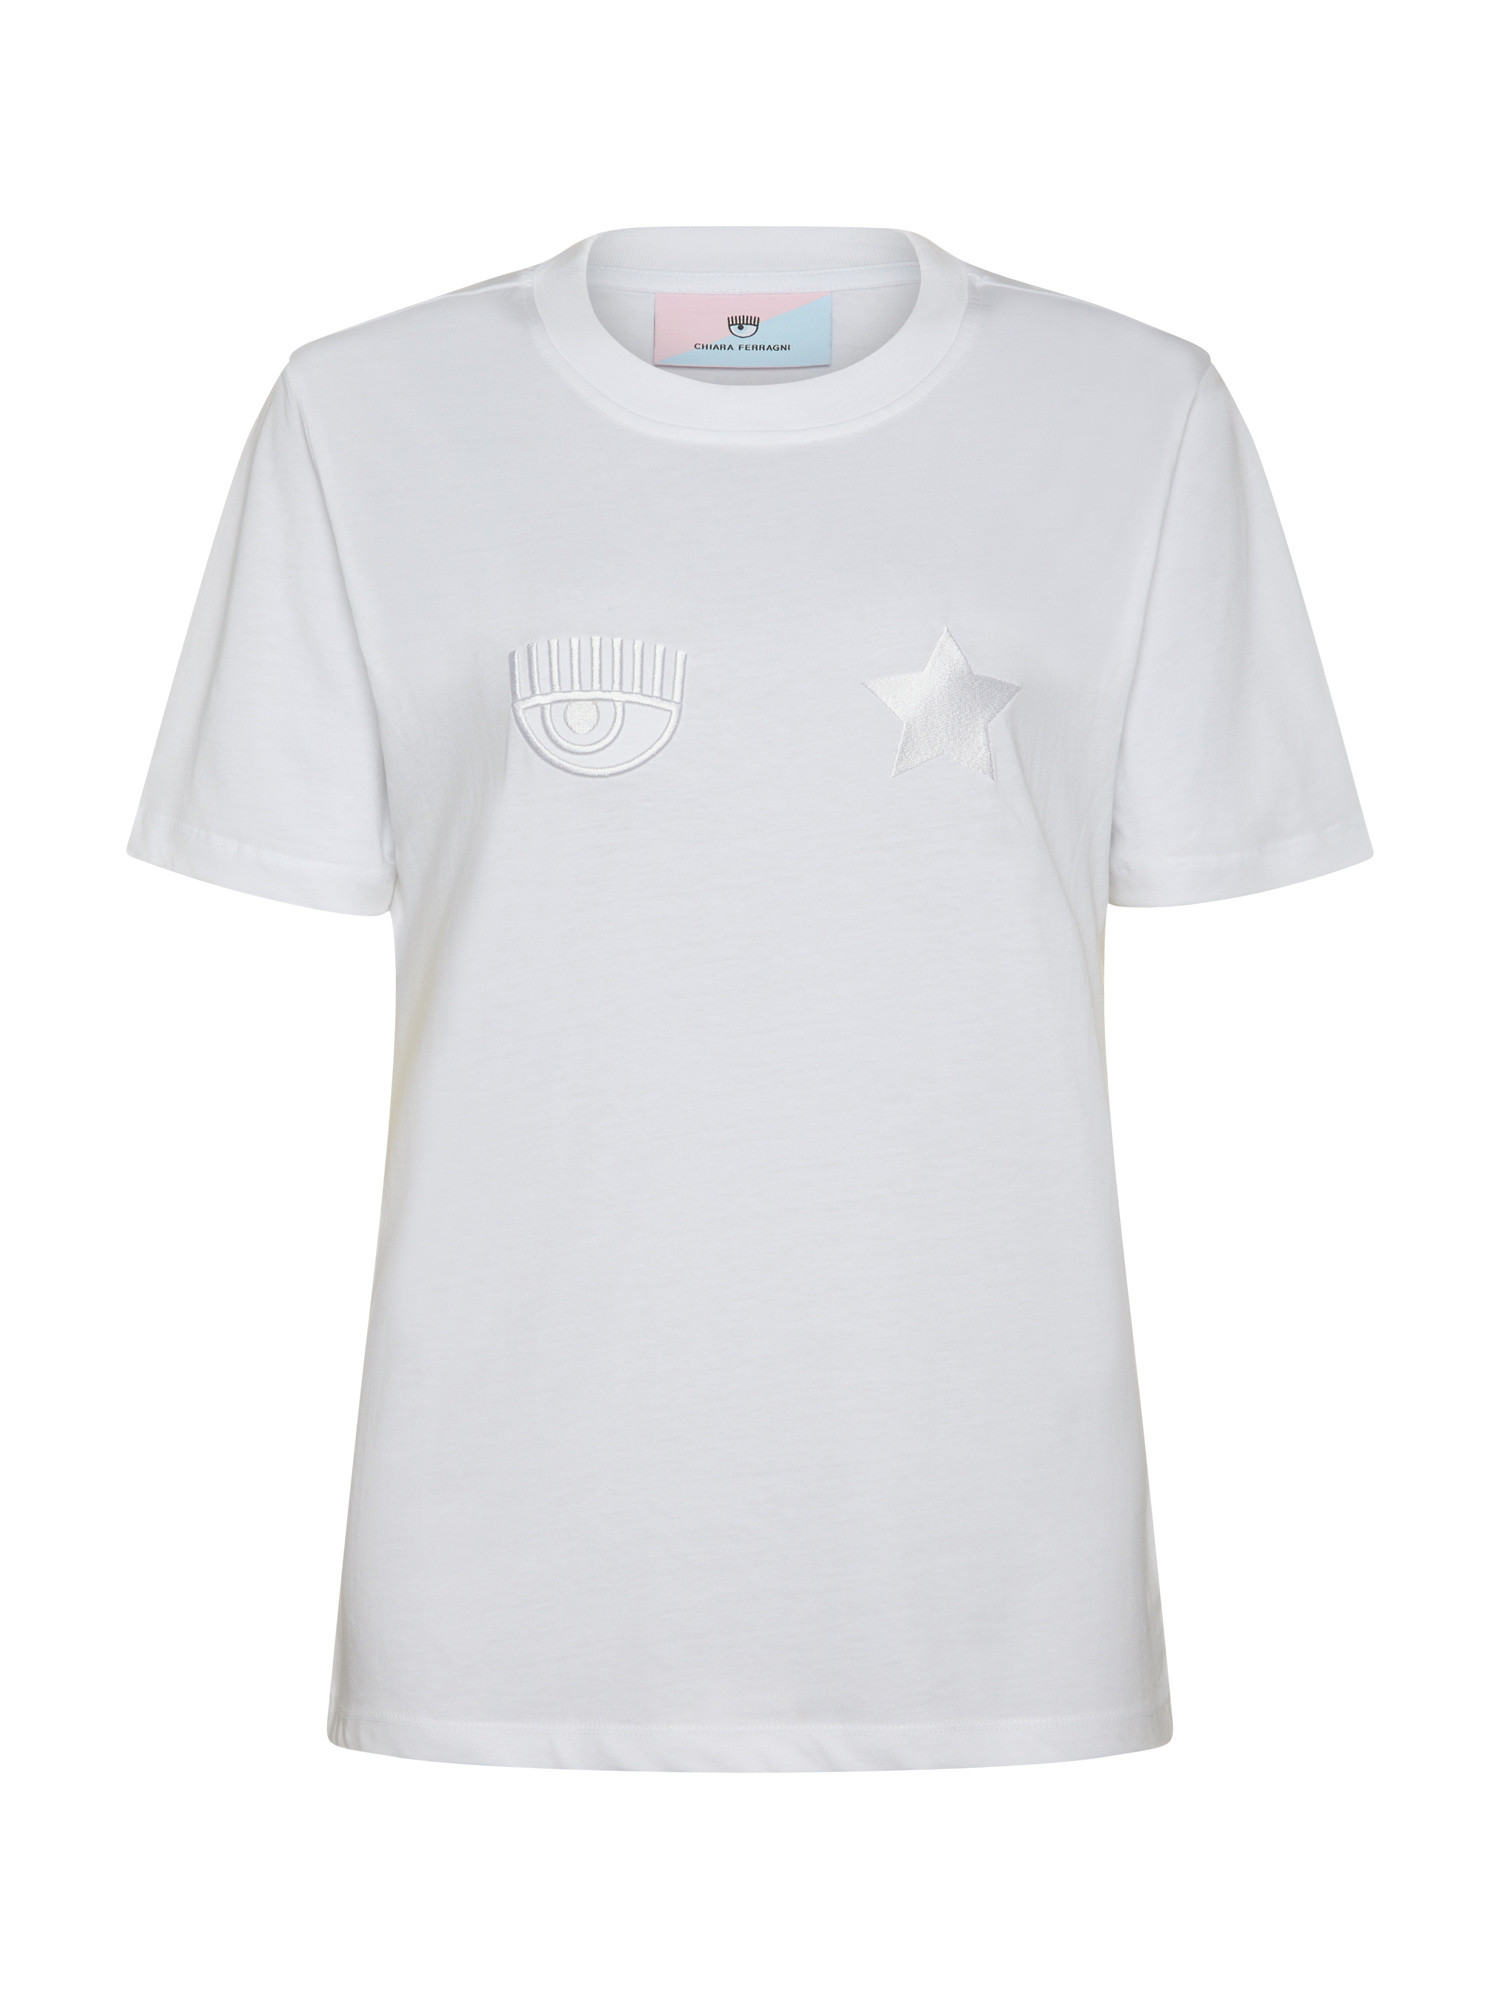 Chiara Ferragni- T-shirt logo ricamato, Bianco, large image number 0